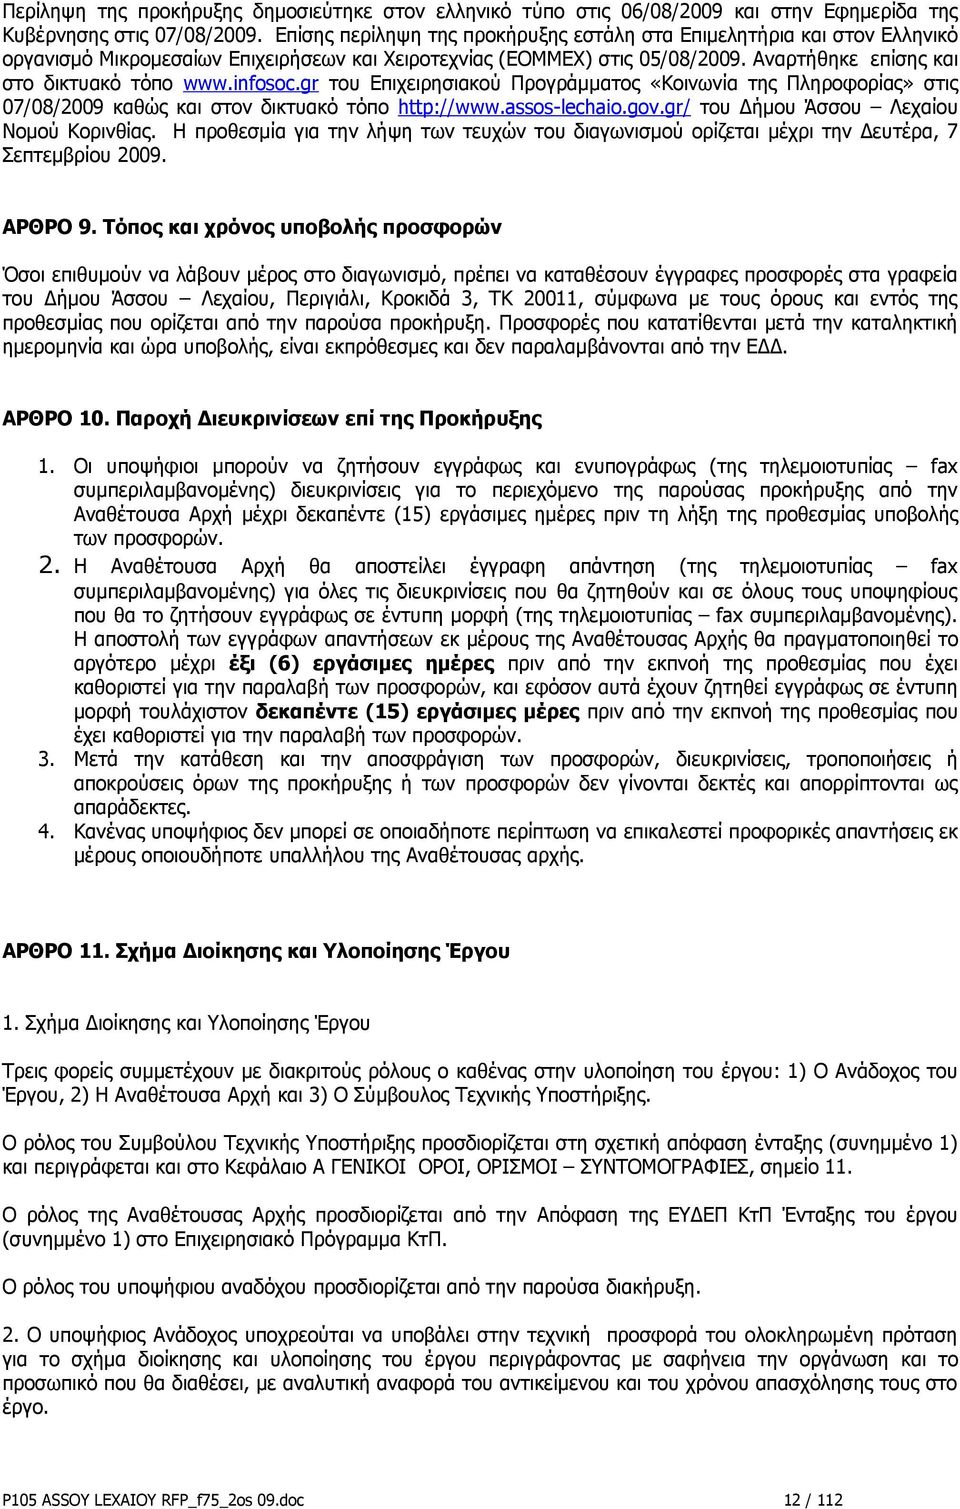 infosoc.gr του Επιχειρησιακού Προγράμματος «Κοινωνία της Πληροφορίας» στις 07/08/2009 καθώς και στον δικτυακό τόπο http://www.assos-lechaio.gov.gr/ του Δήμου Άσσου Λεχαίου Νομού Κορινθίας.